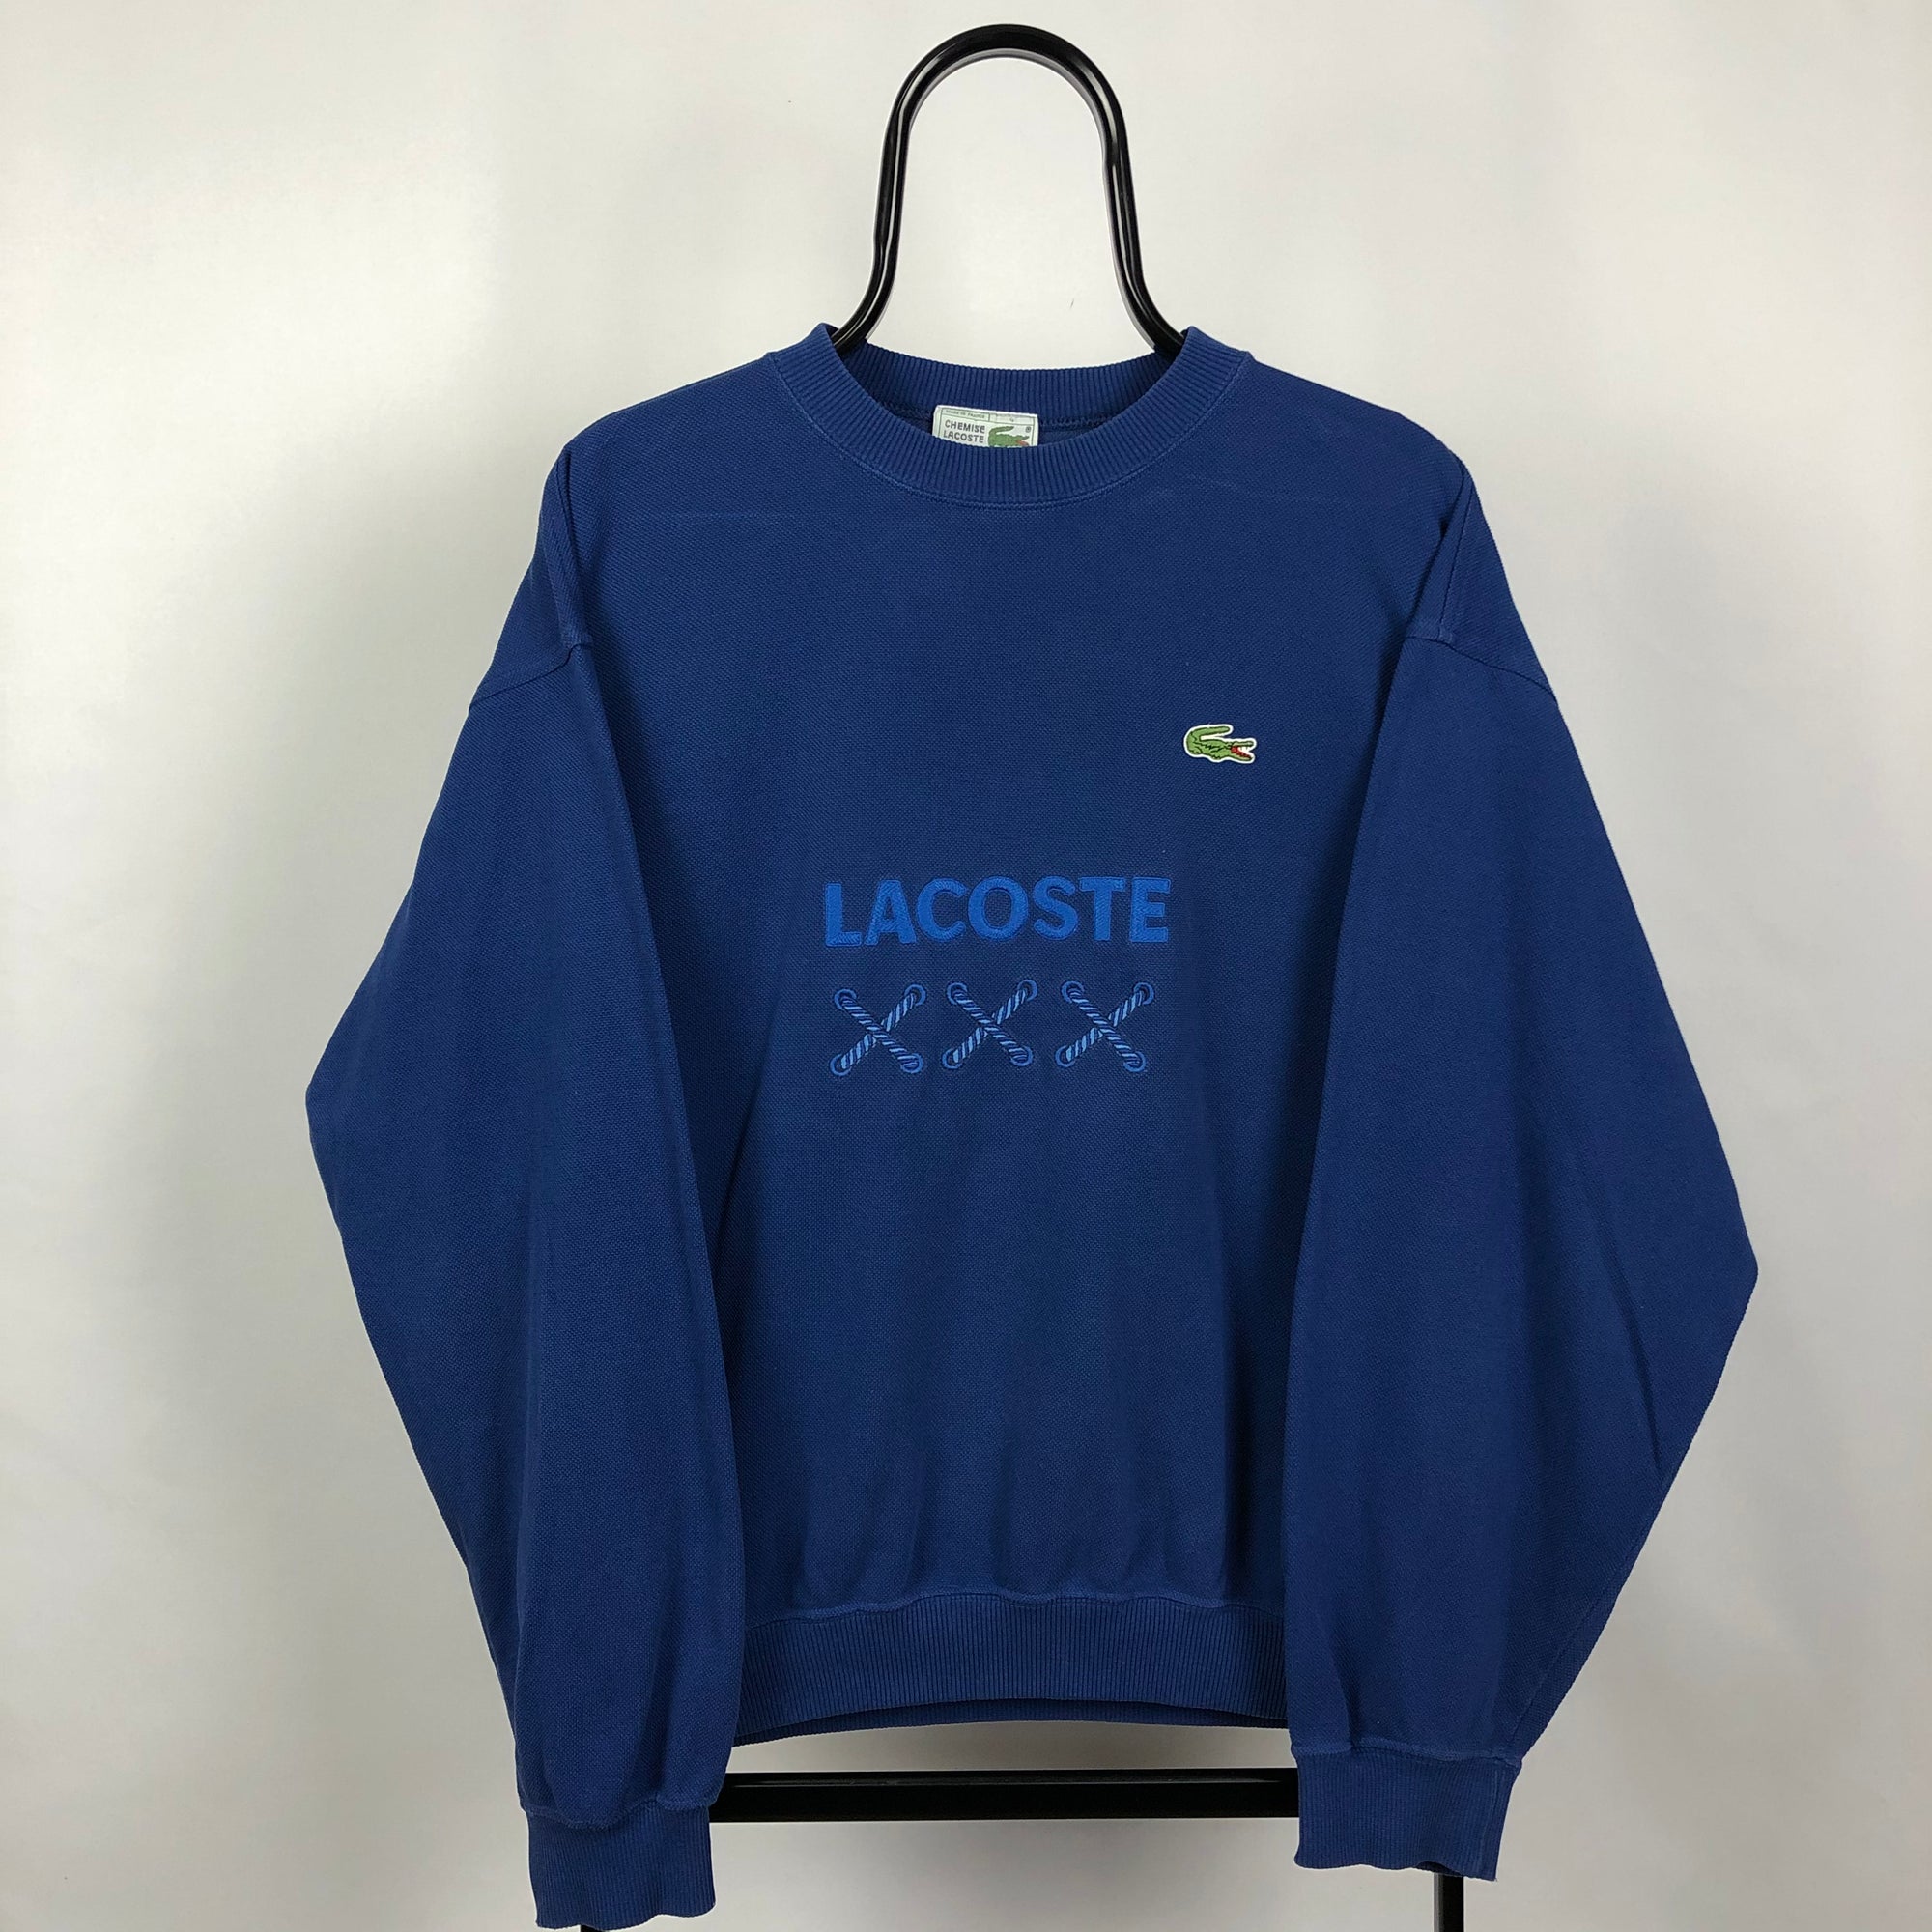 Vintage Lacoste Spellout Sweatshirt - Men's Medium/Women's Large